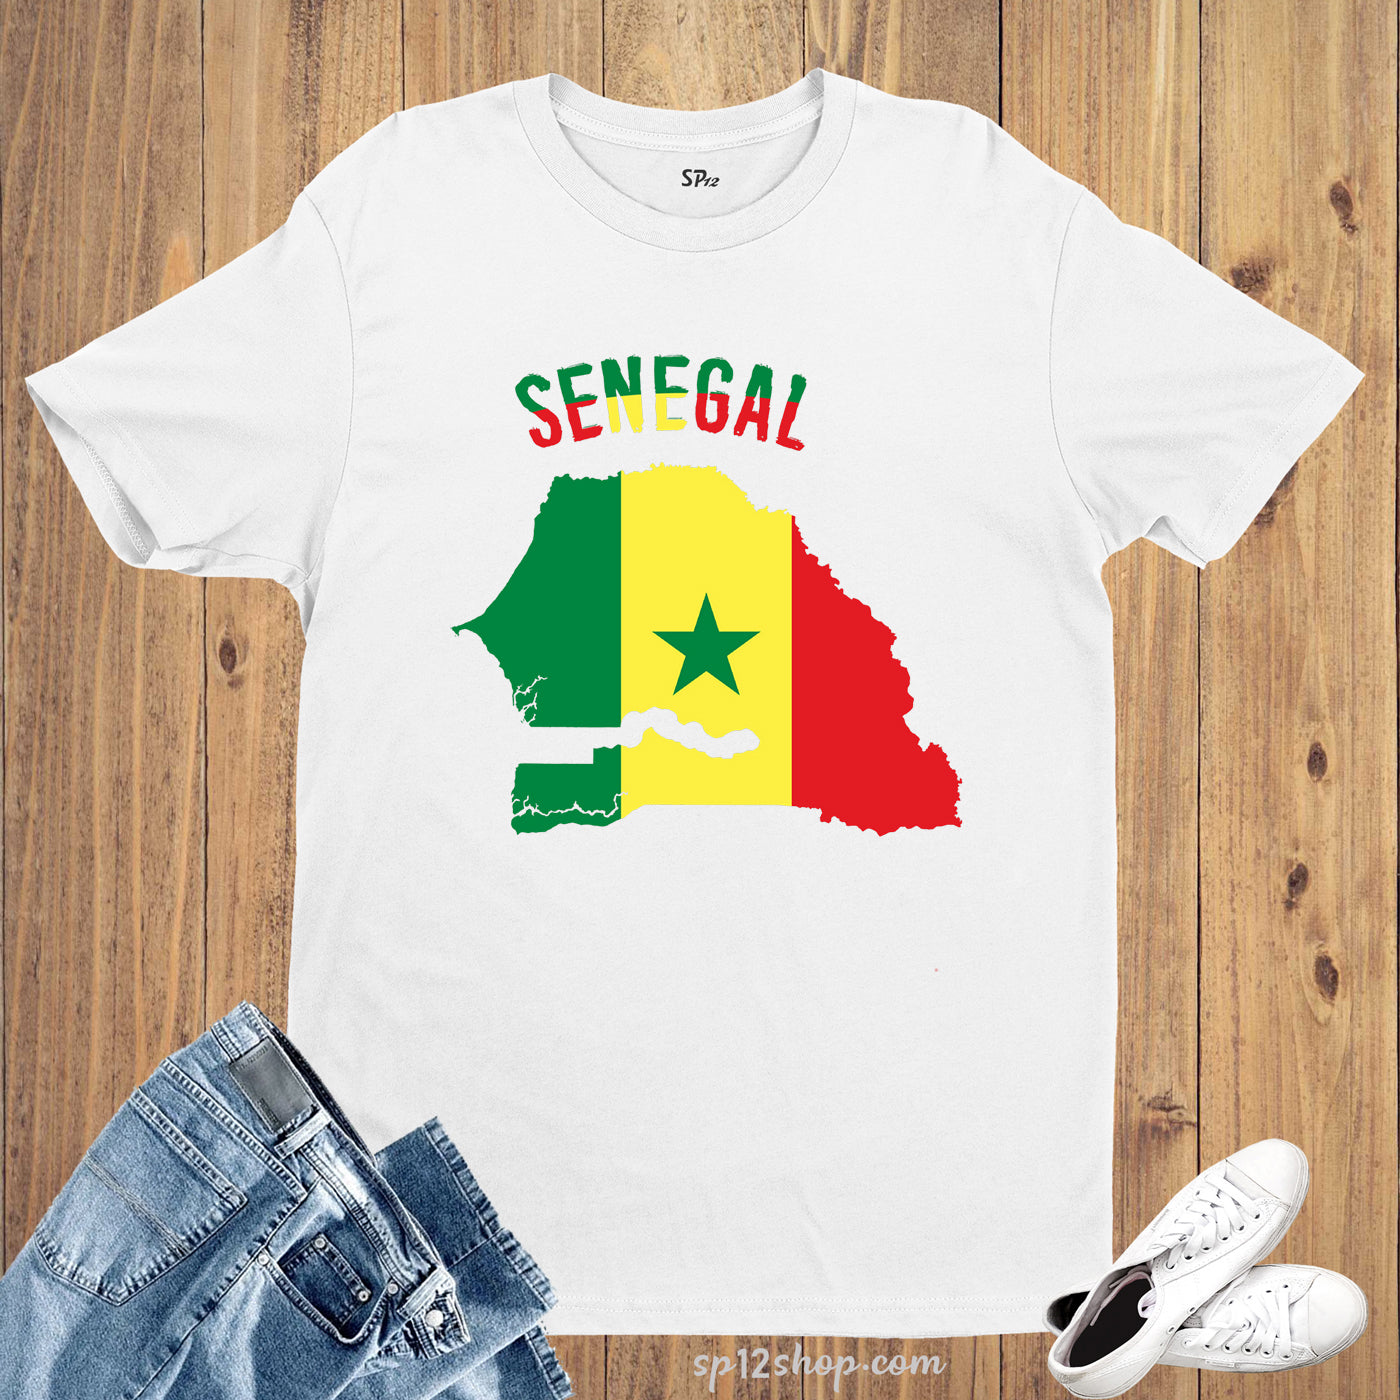 Senegal Flag T Shirt Olympics FIFA World Cup Country Flag Tee Shirt